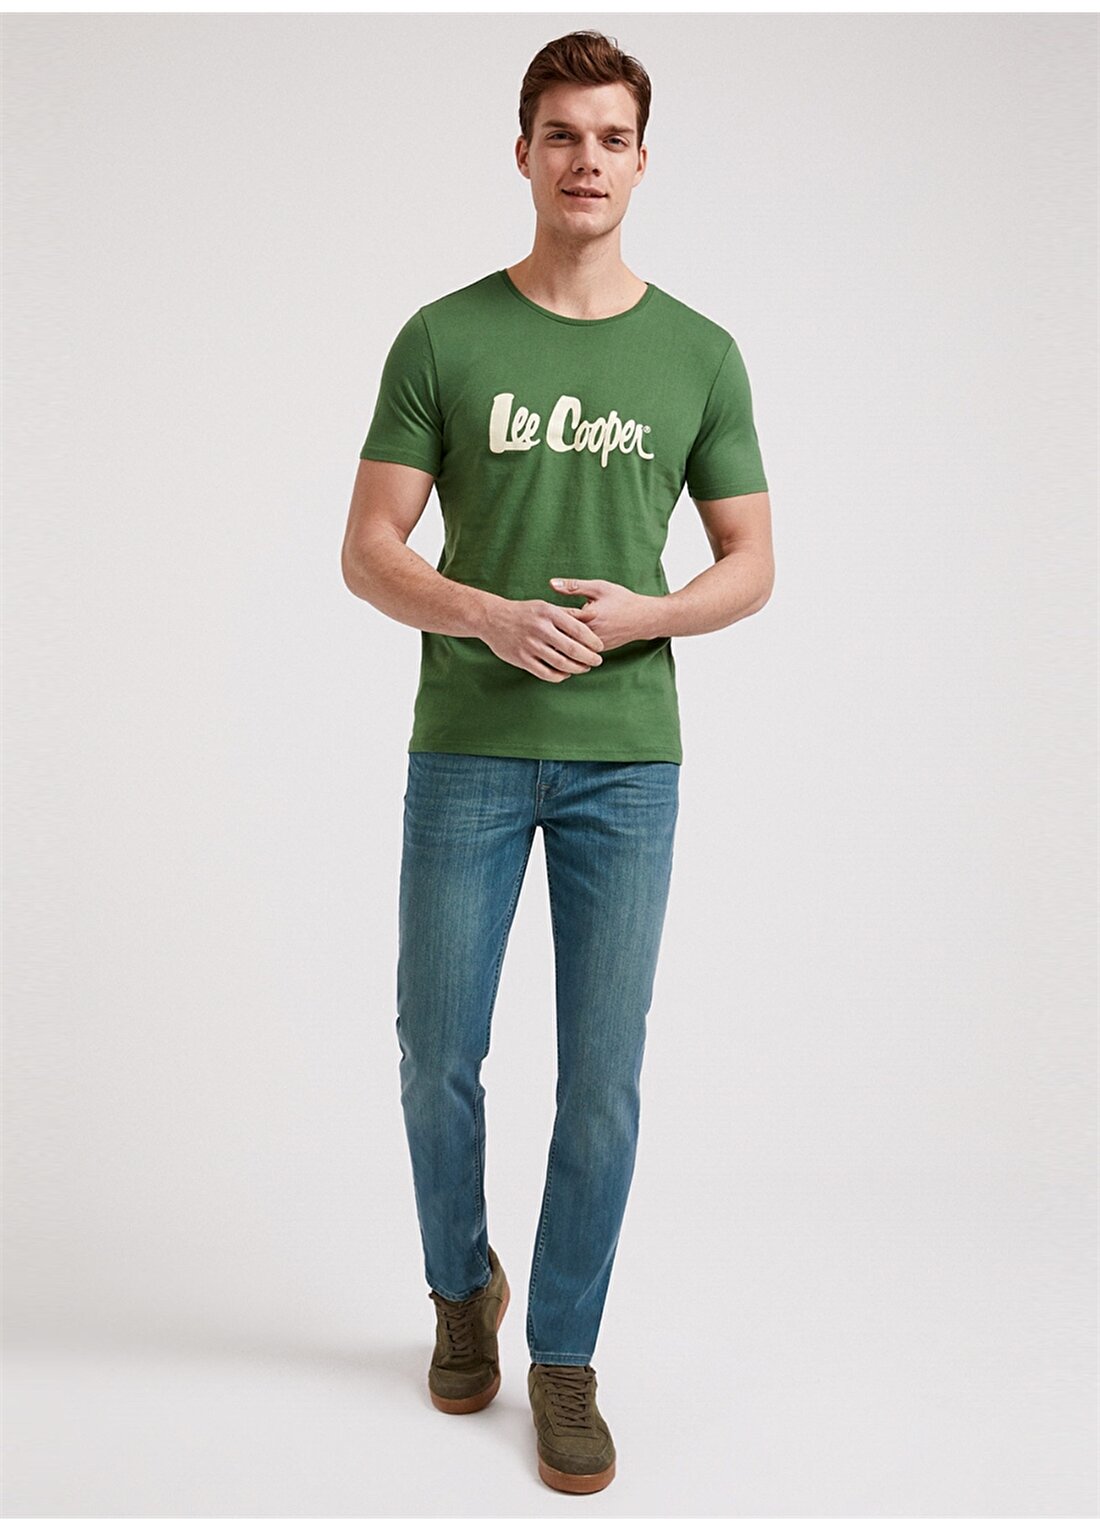 Lee Cooper Londonlogo Yeşil T-Shirt